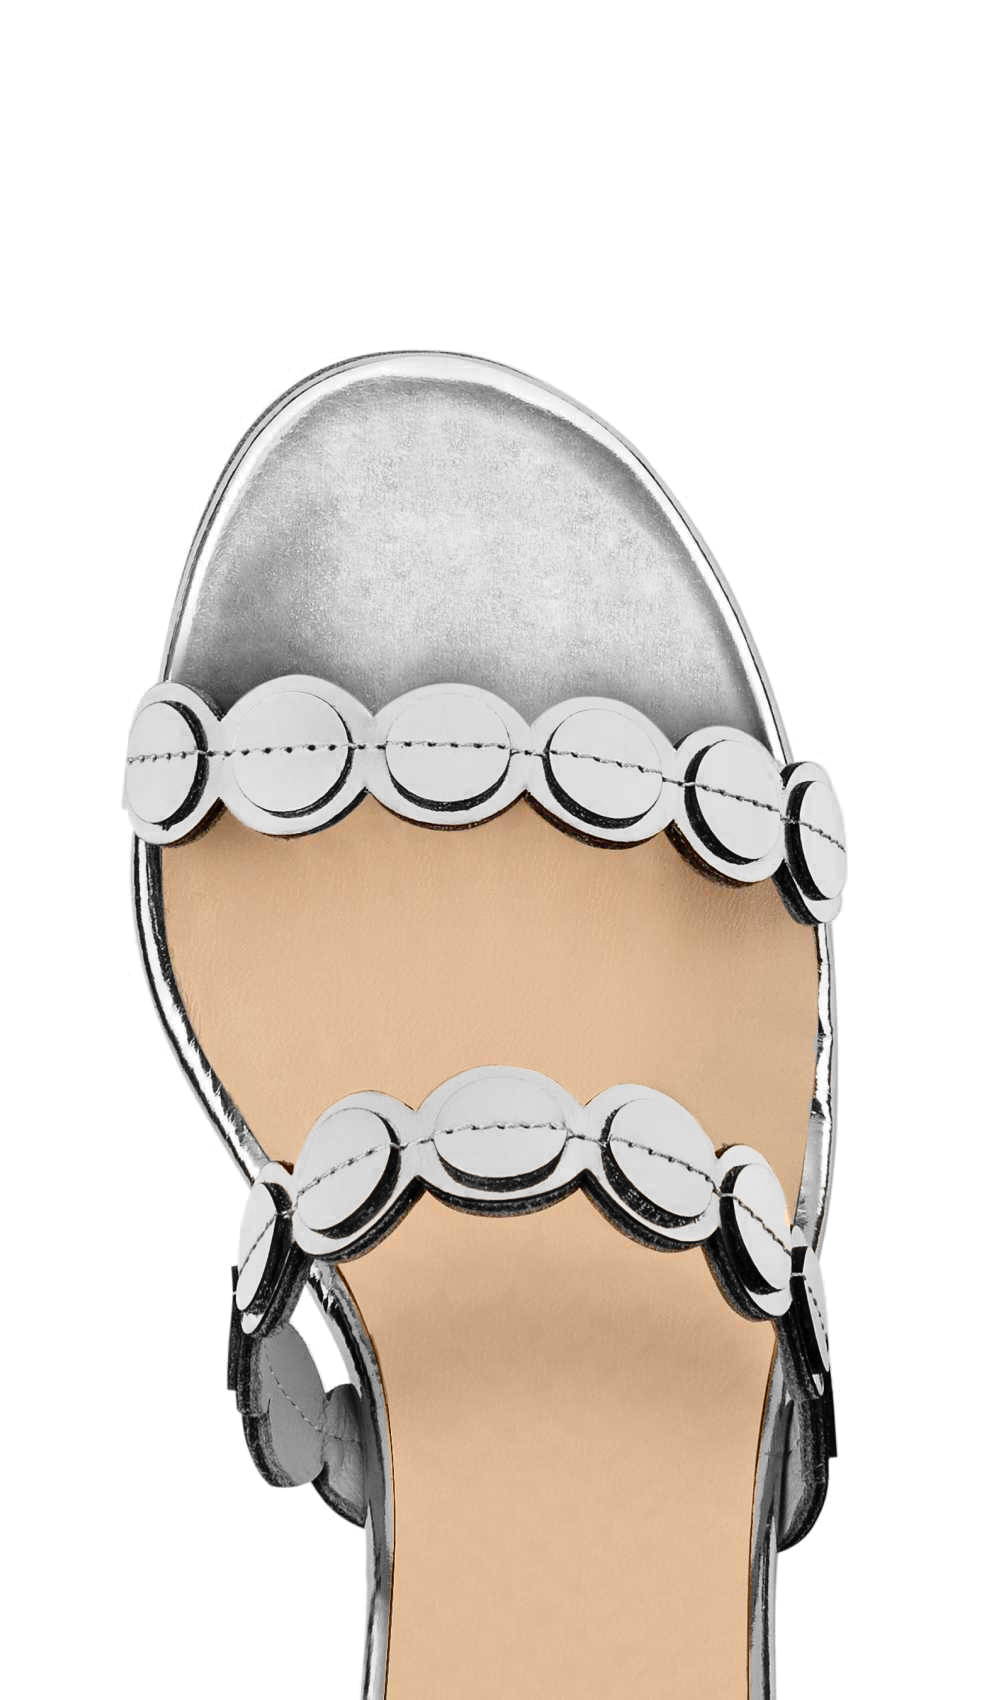 Sans Souci Sandal in metallic silver